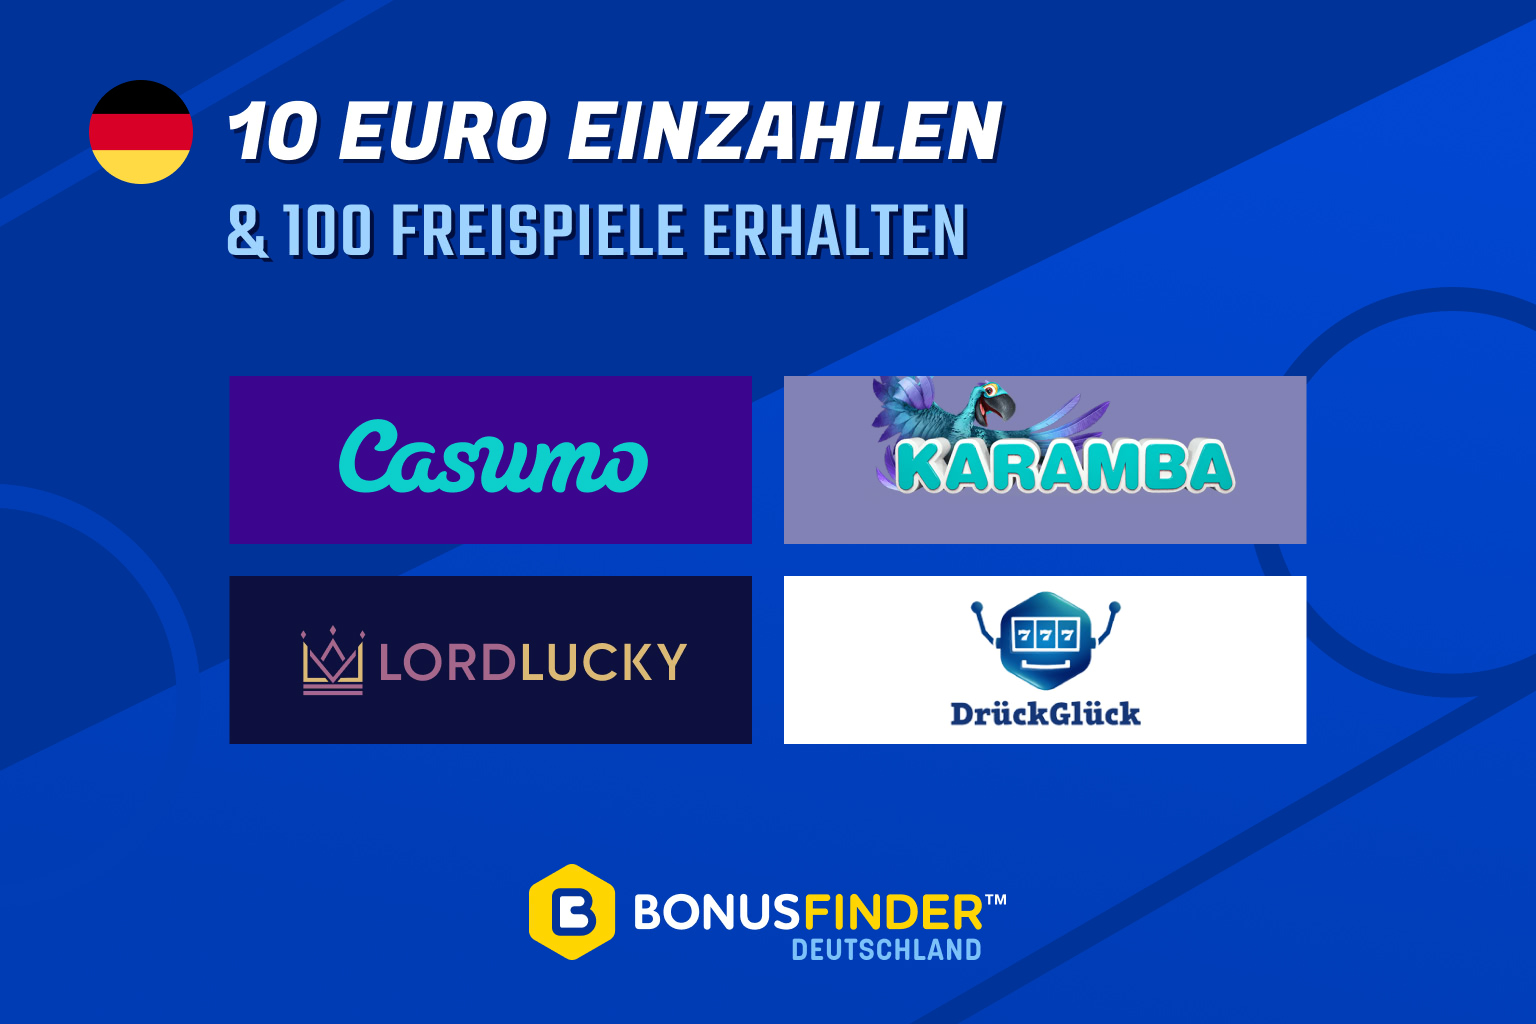 10 euro einzahlen 100 freispiele